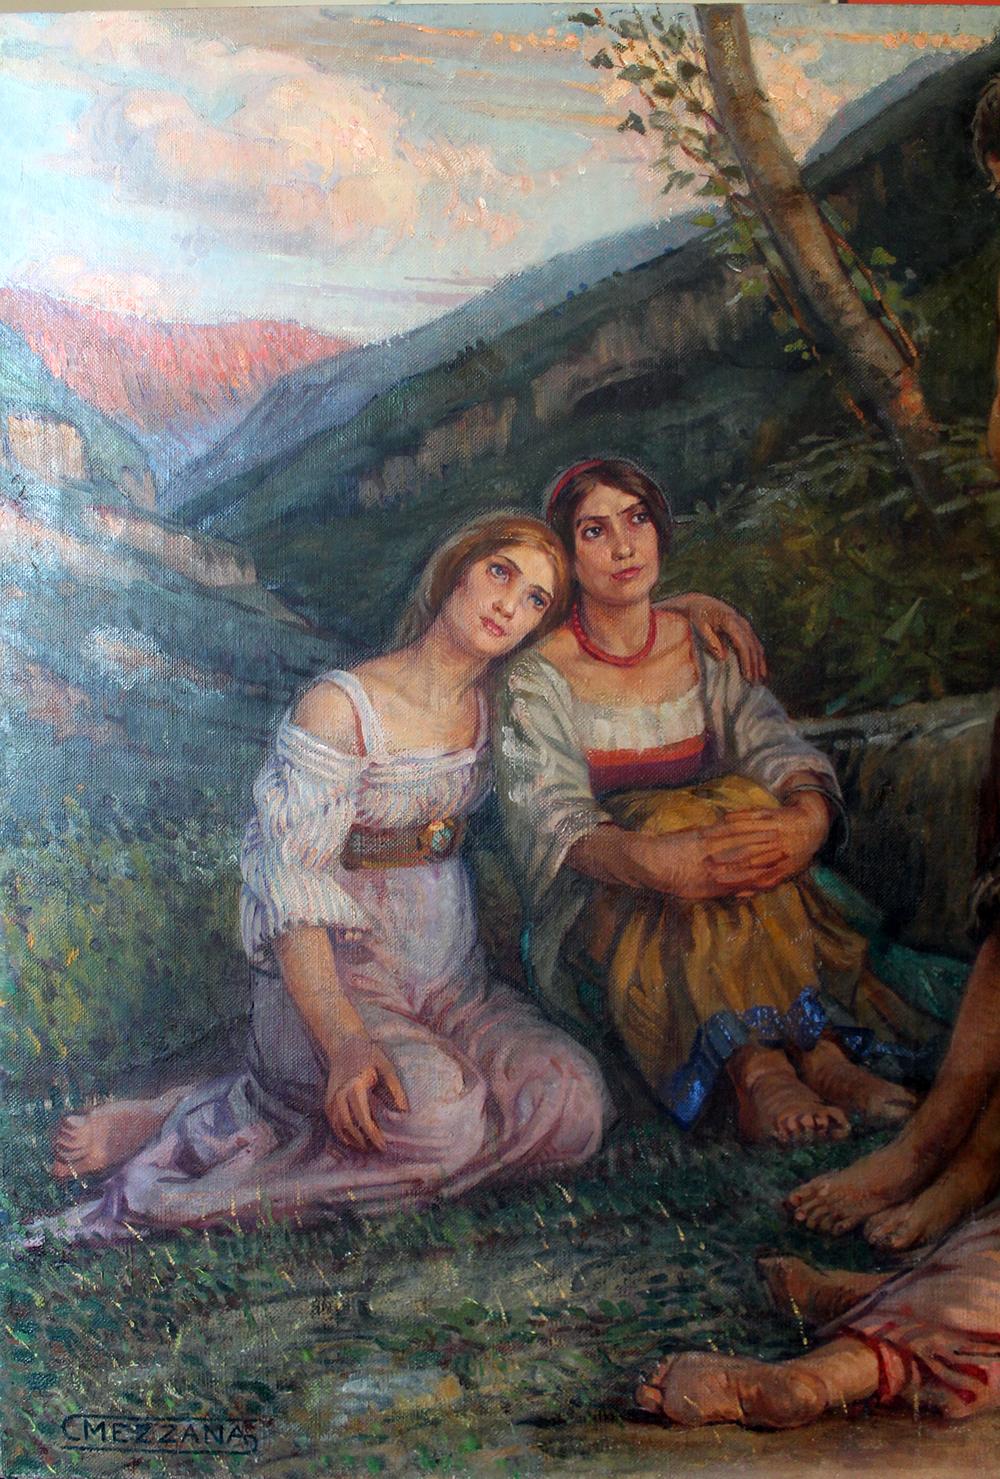 Corrado Mezzana (italian 1890-1958) Large Oil Painting (132x102cm) Signed, 1931 For Sale 12